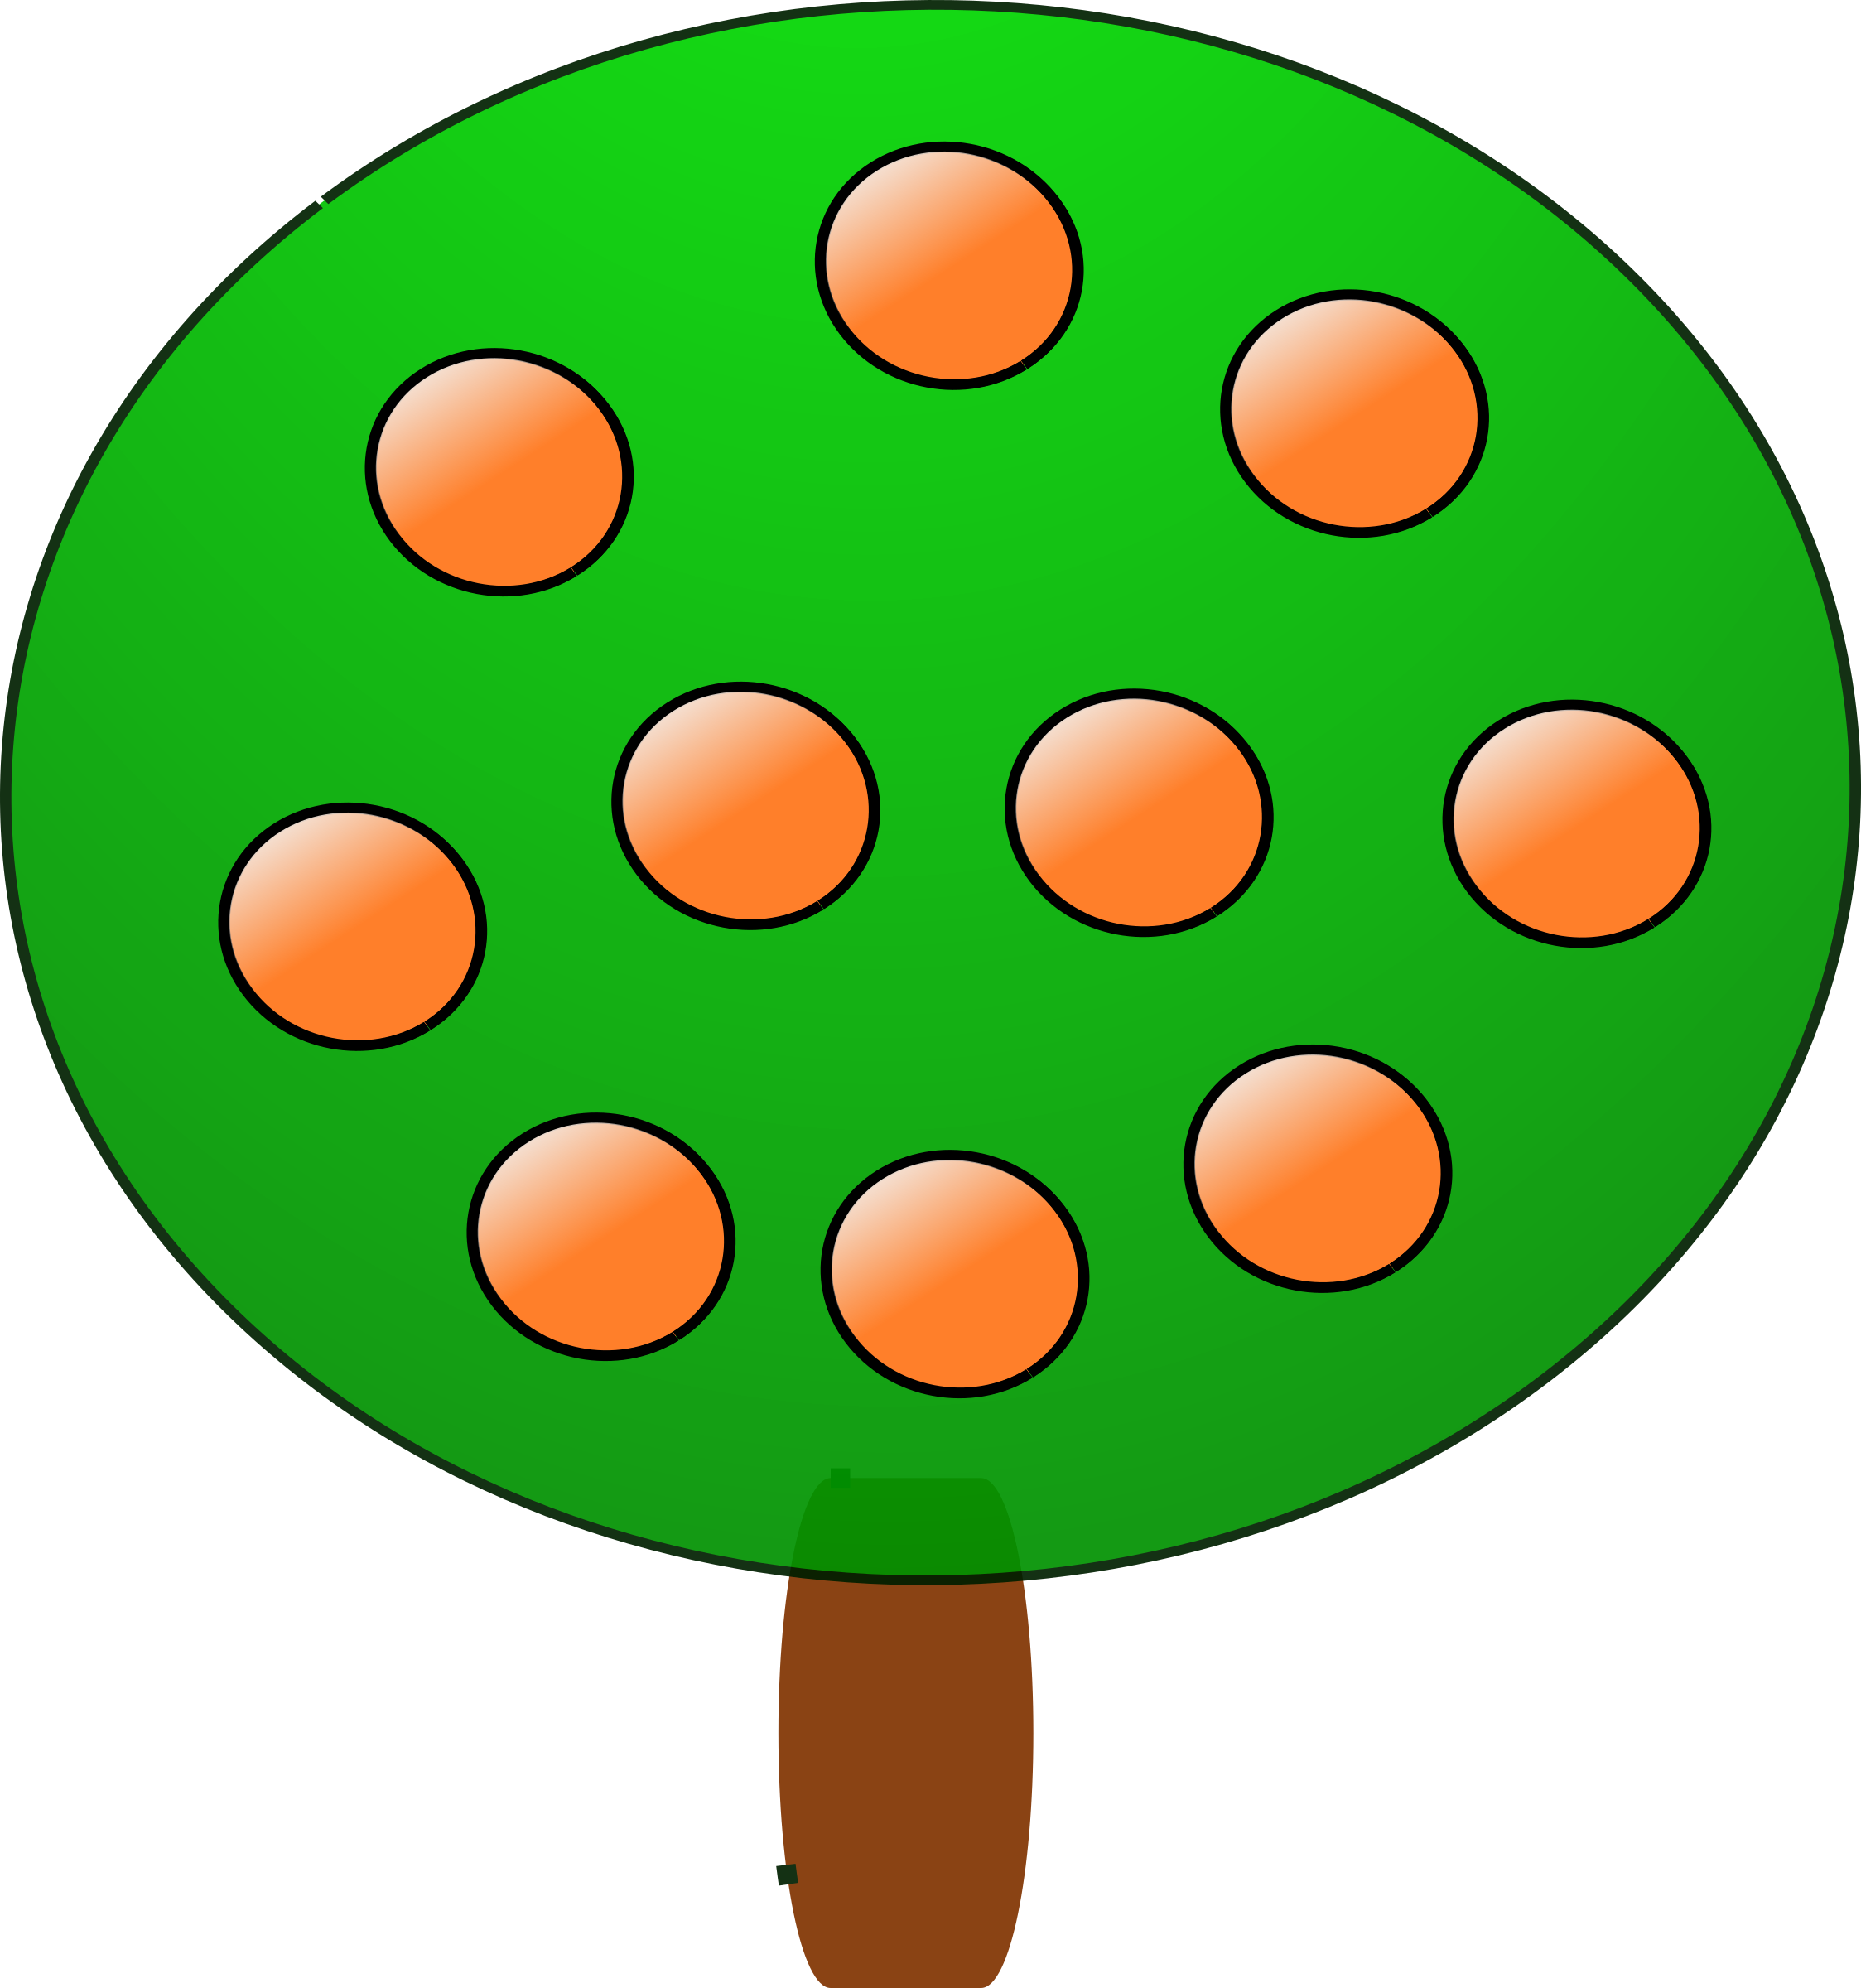 Big Image - Fruit Tree (2247x2400)